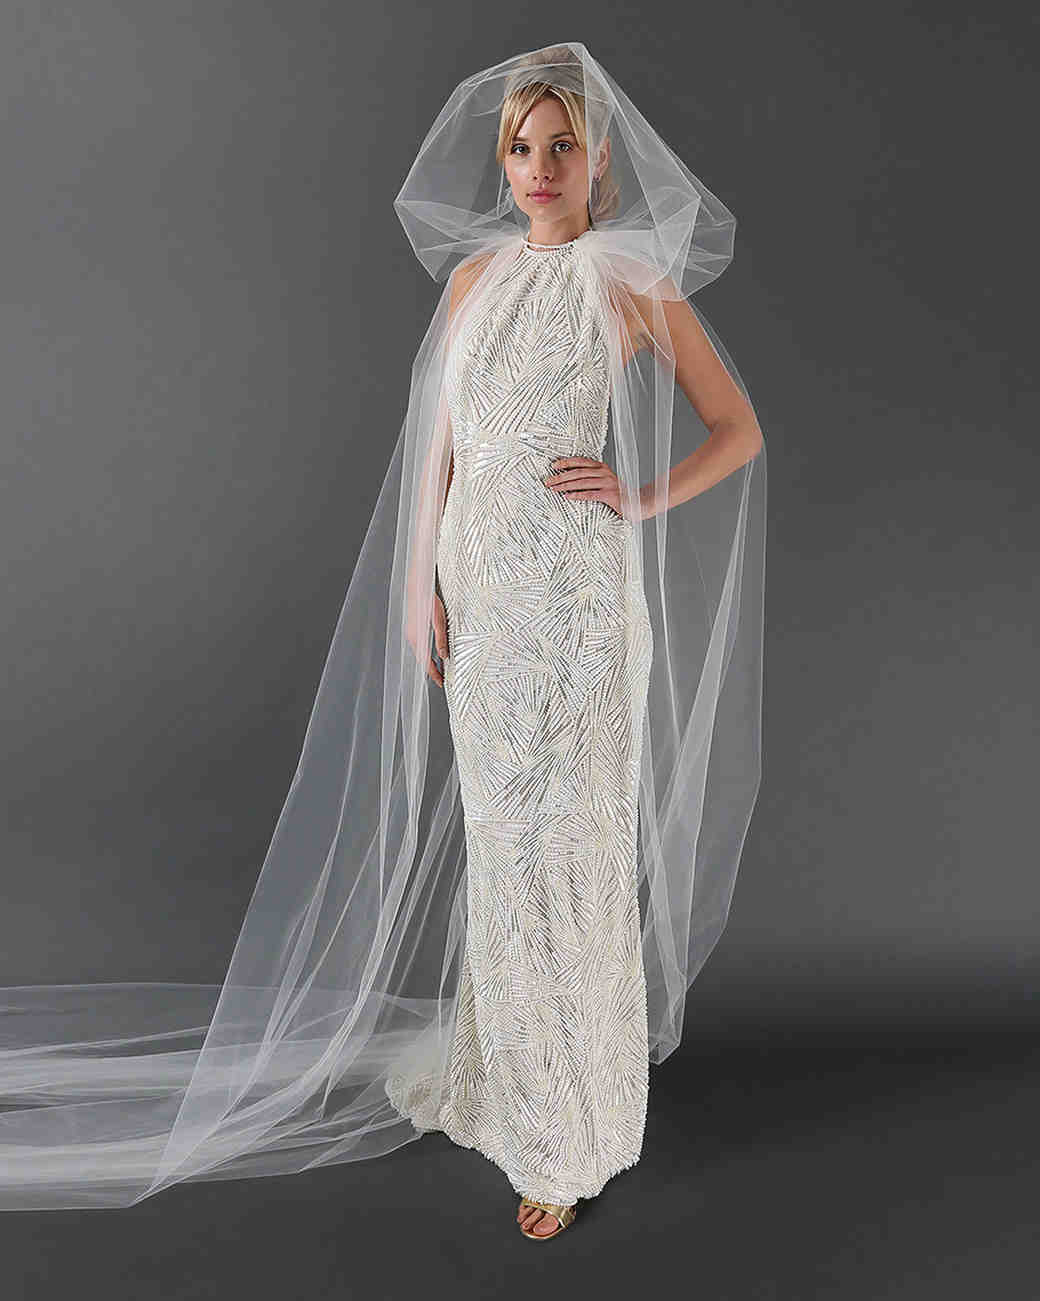 Randi Rahm Fall 2017 Wedding Dress Collection Martha Stewart Weddings 4278